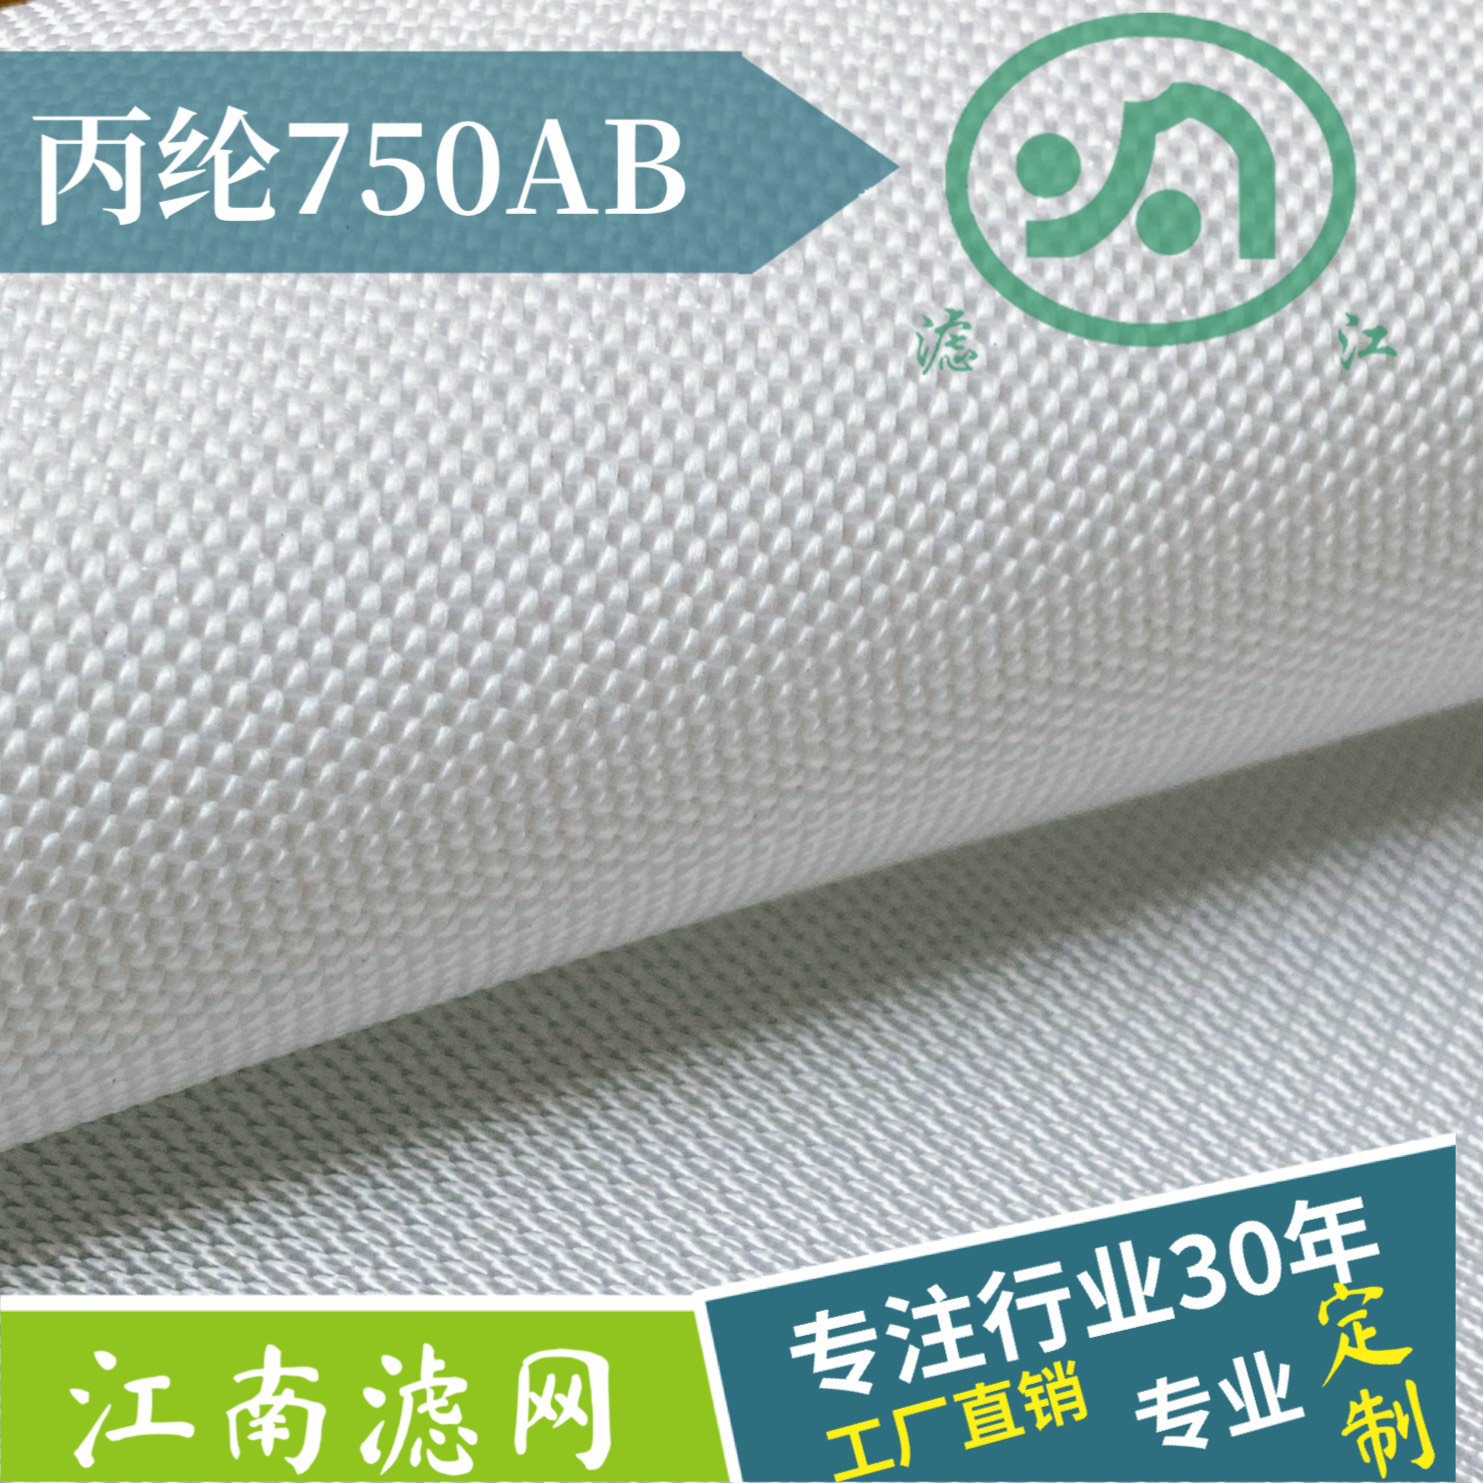 Polypropylene filter cloth 750AB